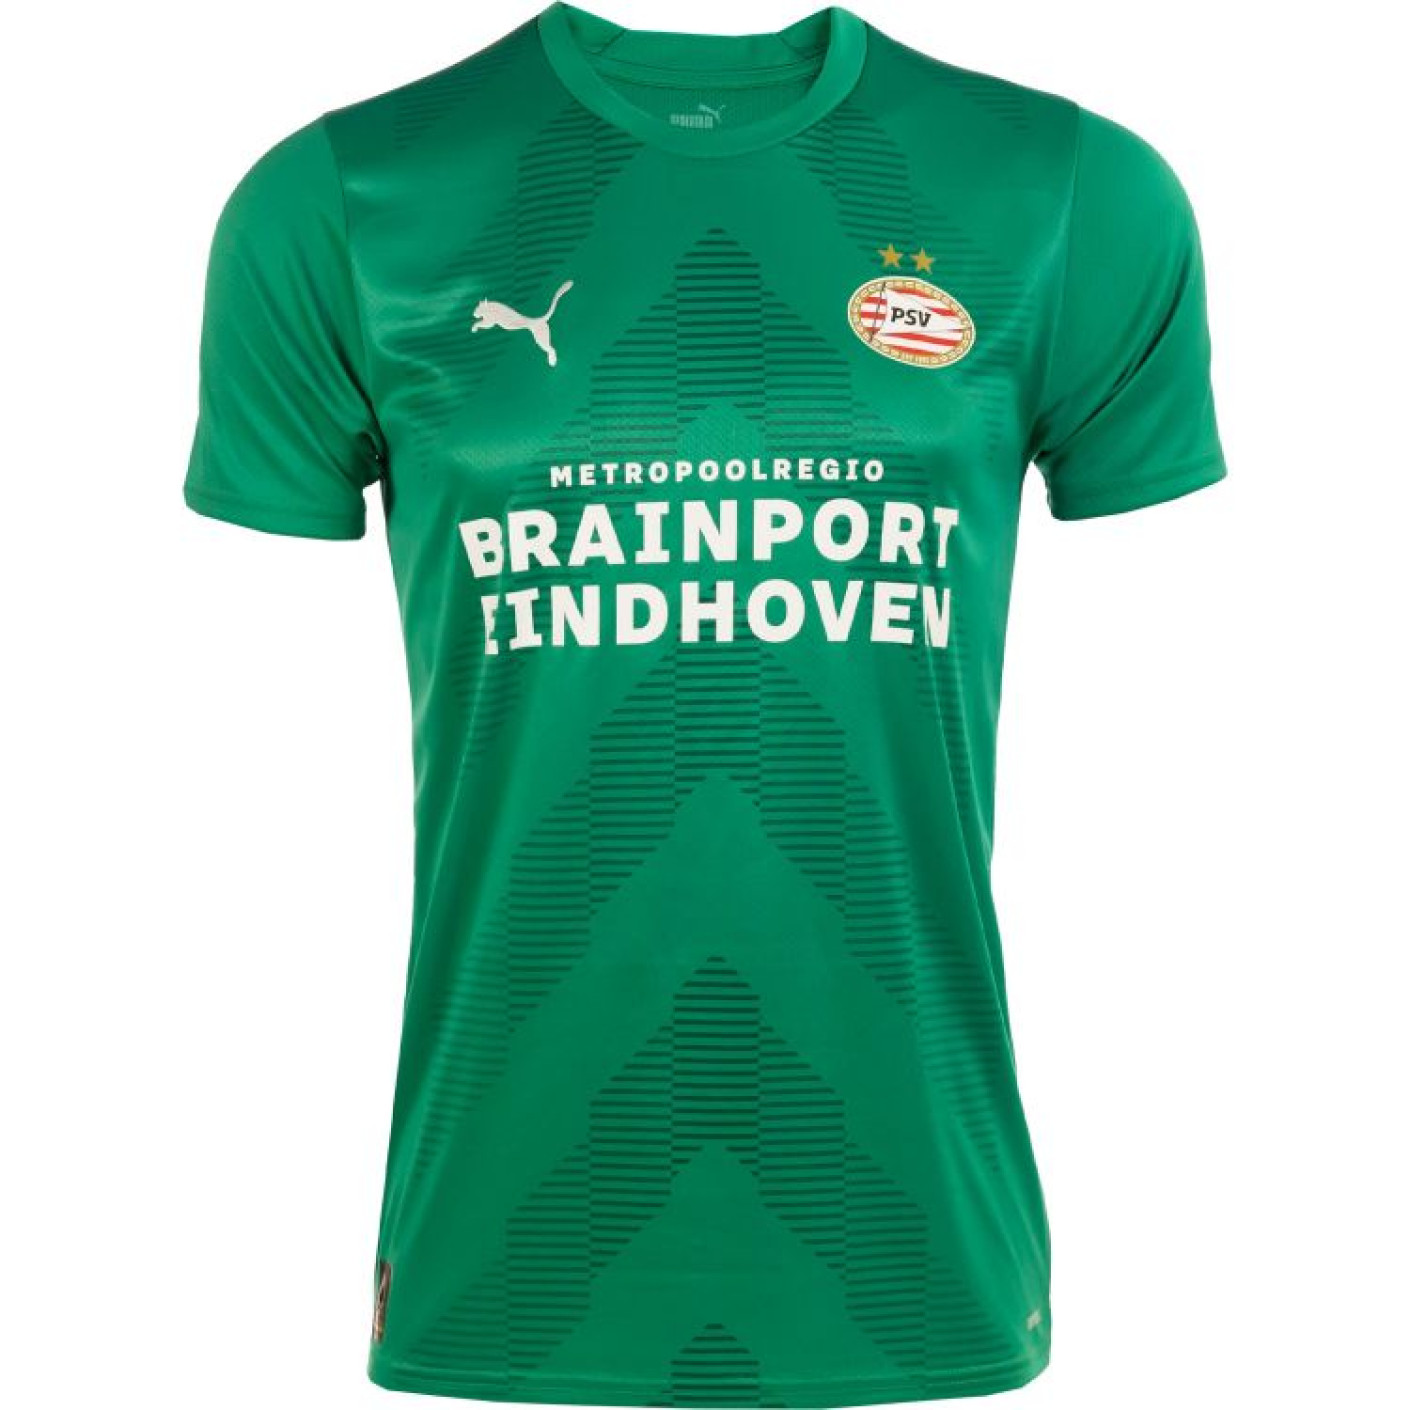 Aanpassen overspringen Obsessie PSV Keepersshirt 22/23 Pepper Green - PSVFANstore.nl